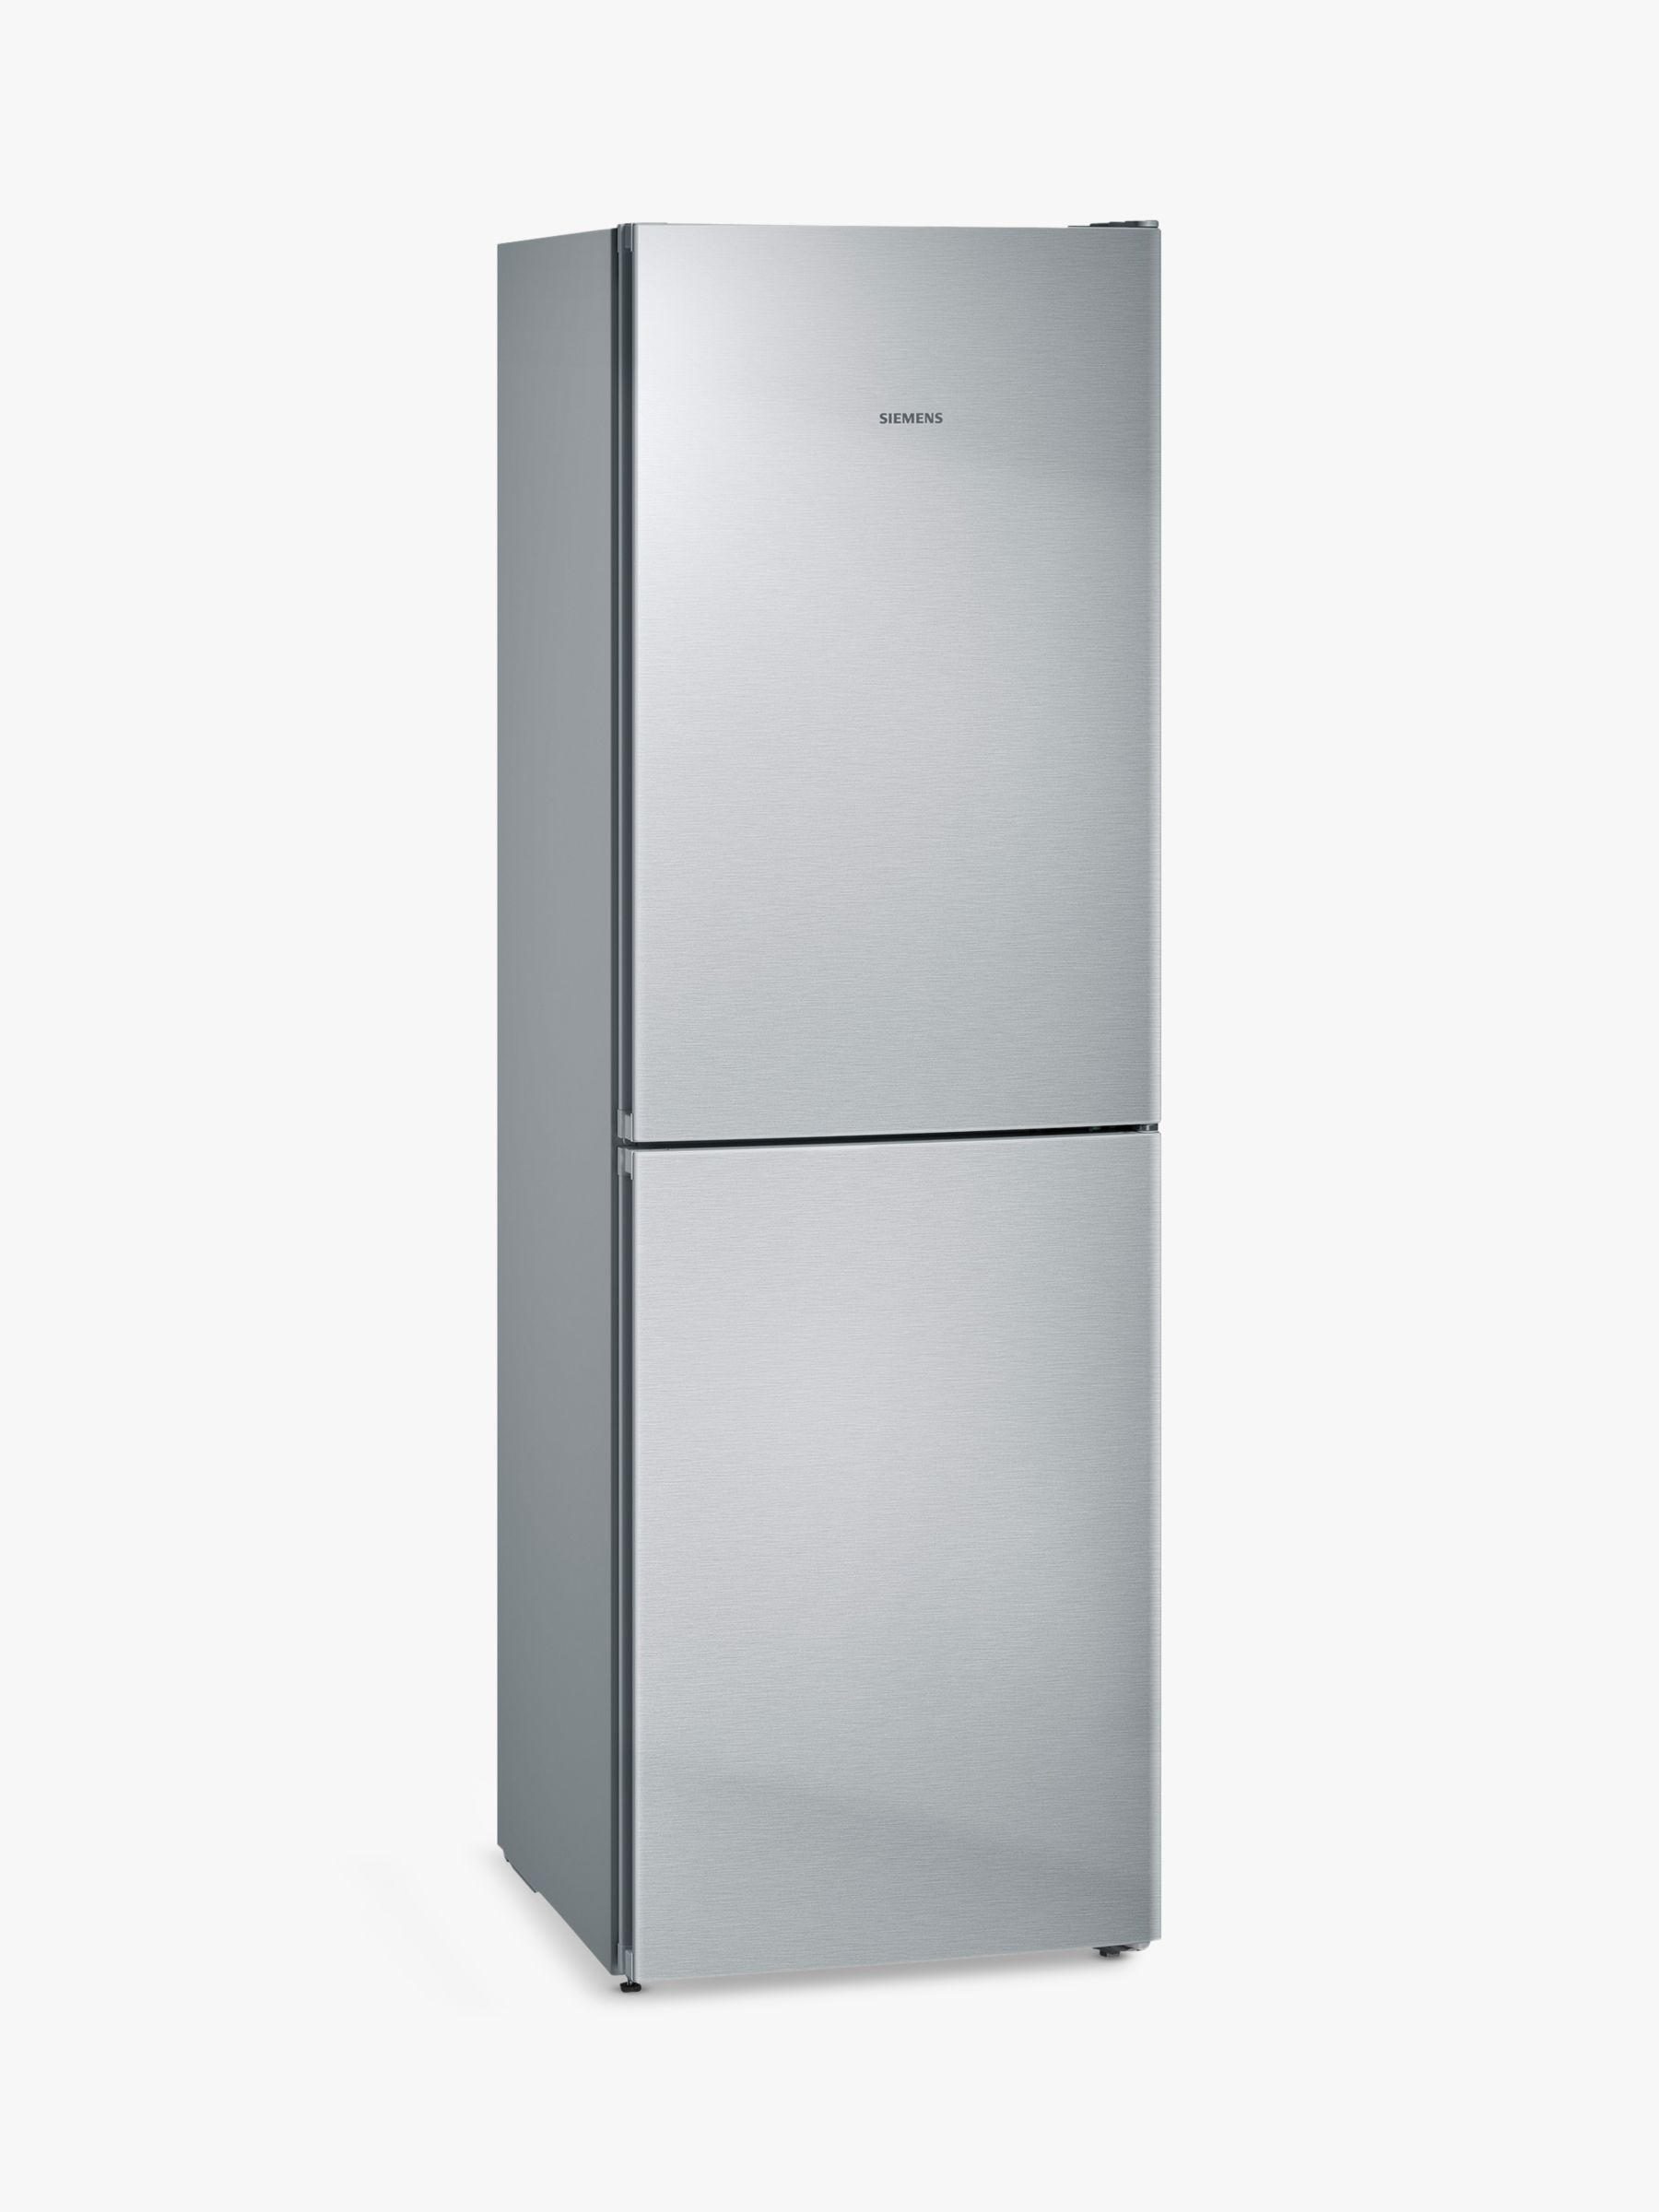 Siemens KG34NVI35G Freestanding Fridge Freezer, A++ Energy Rating, 60cm Wide, Stainless Steel